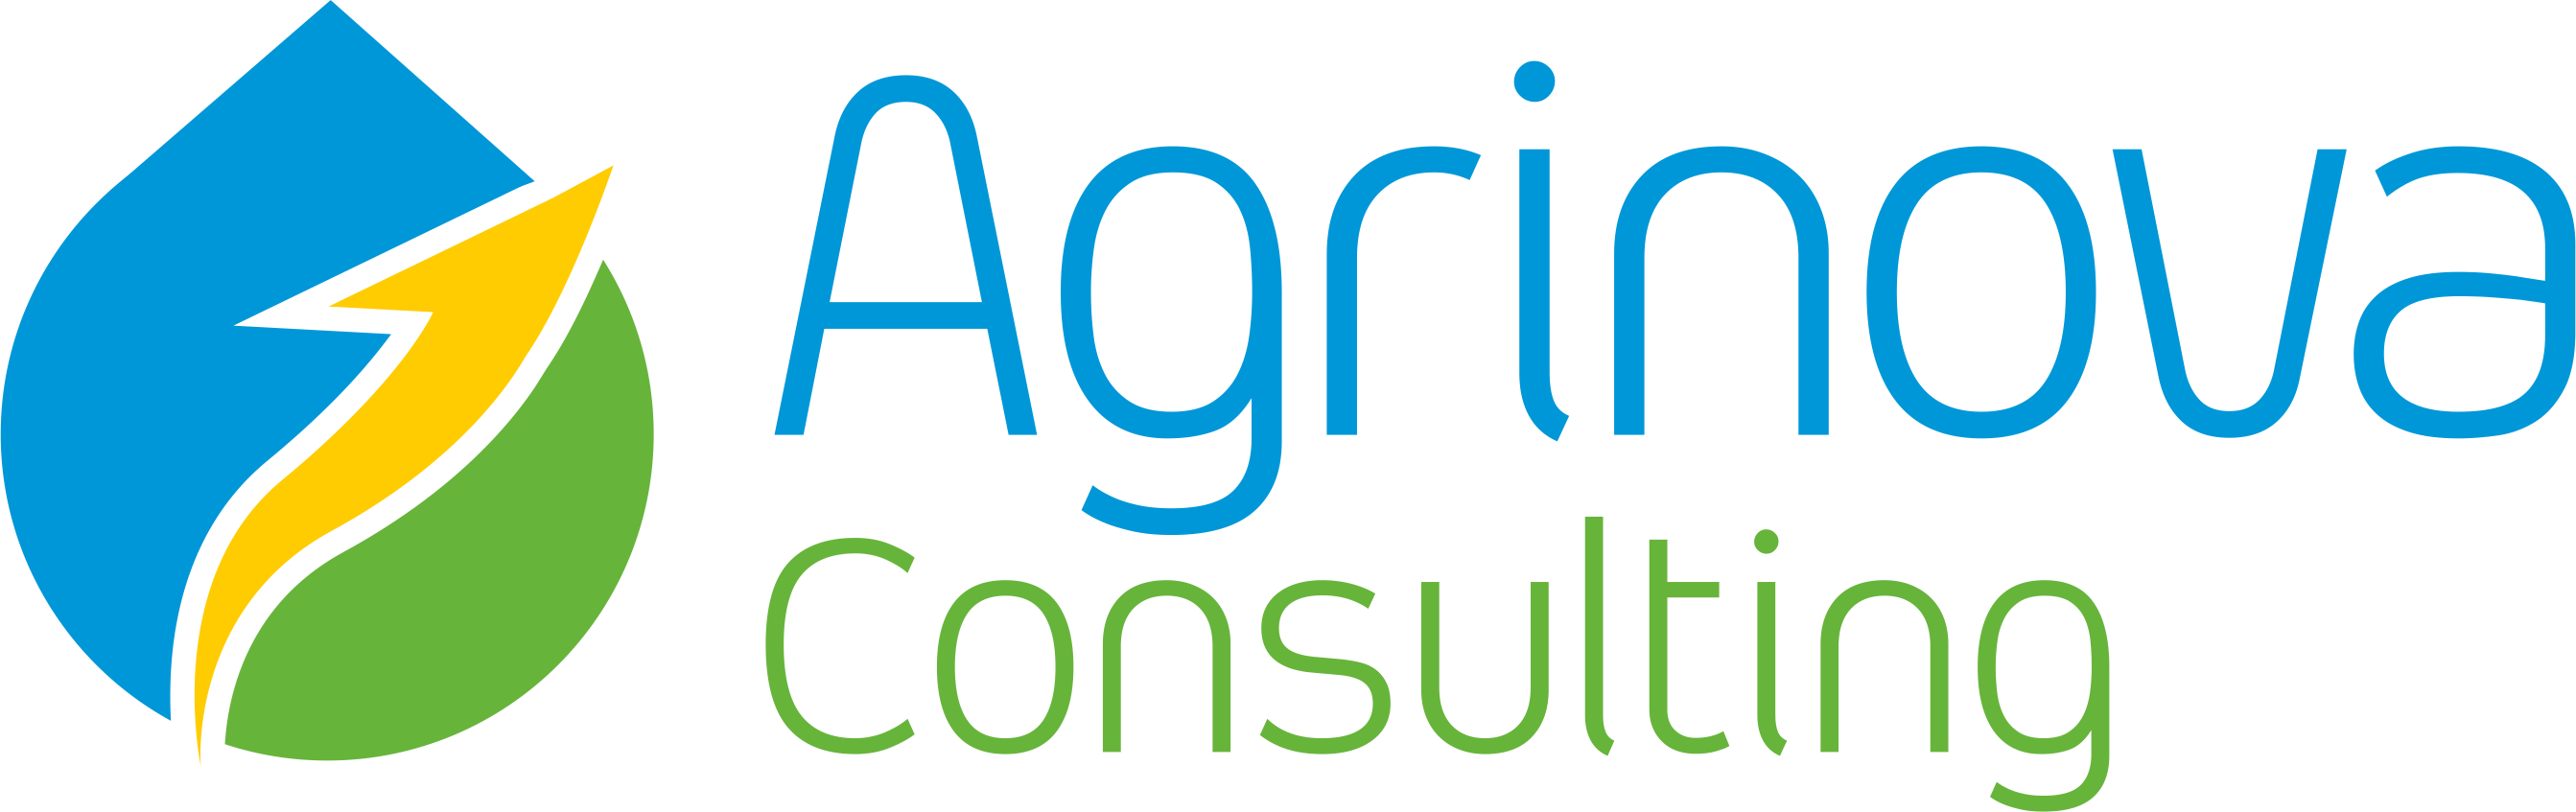 Agrinova Consulting